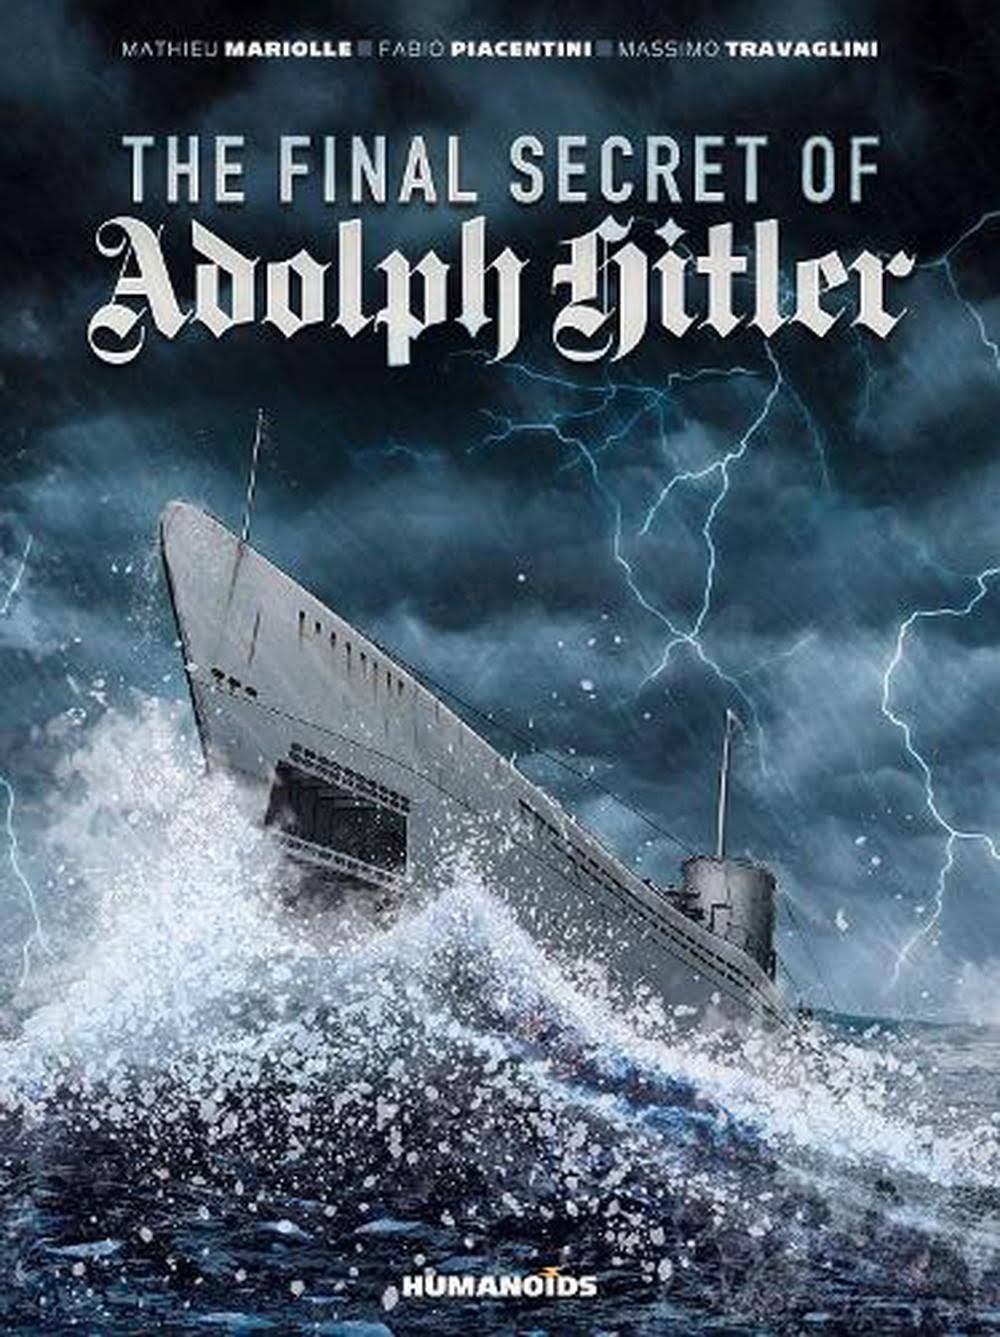 The Final Secret of Adolf Hitler [Book]